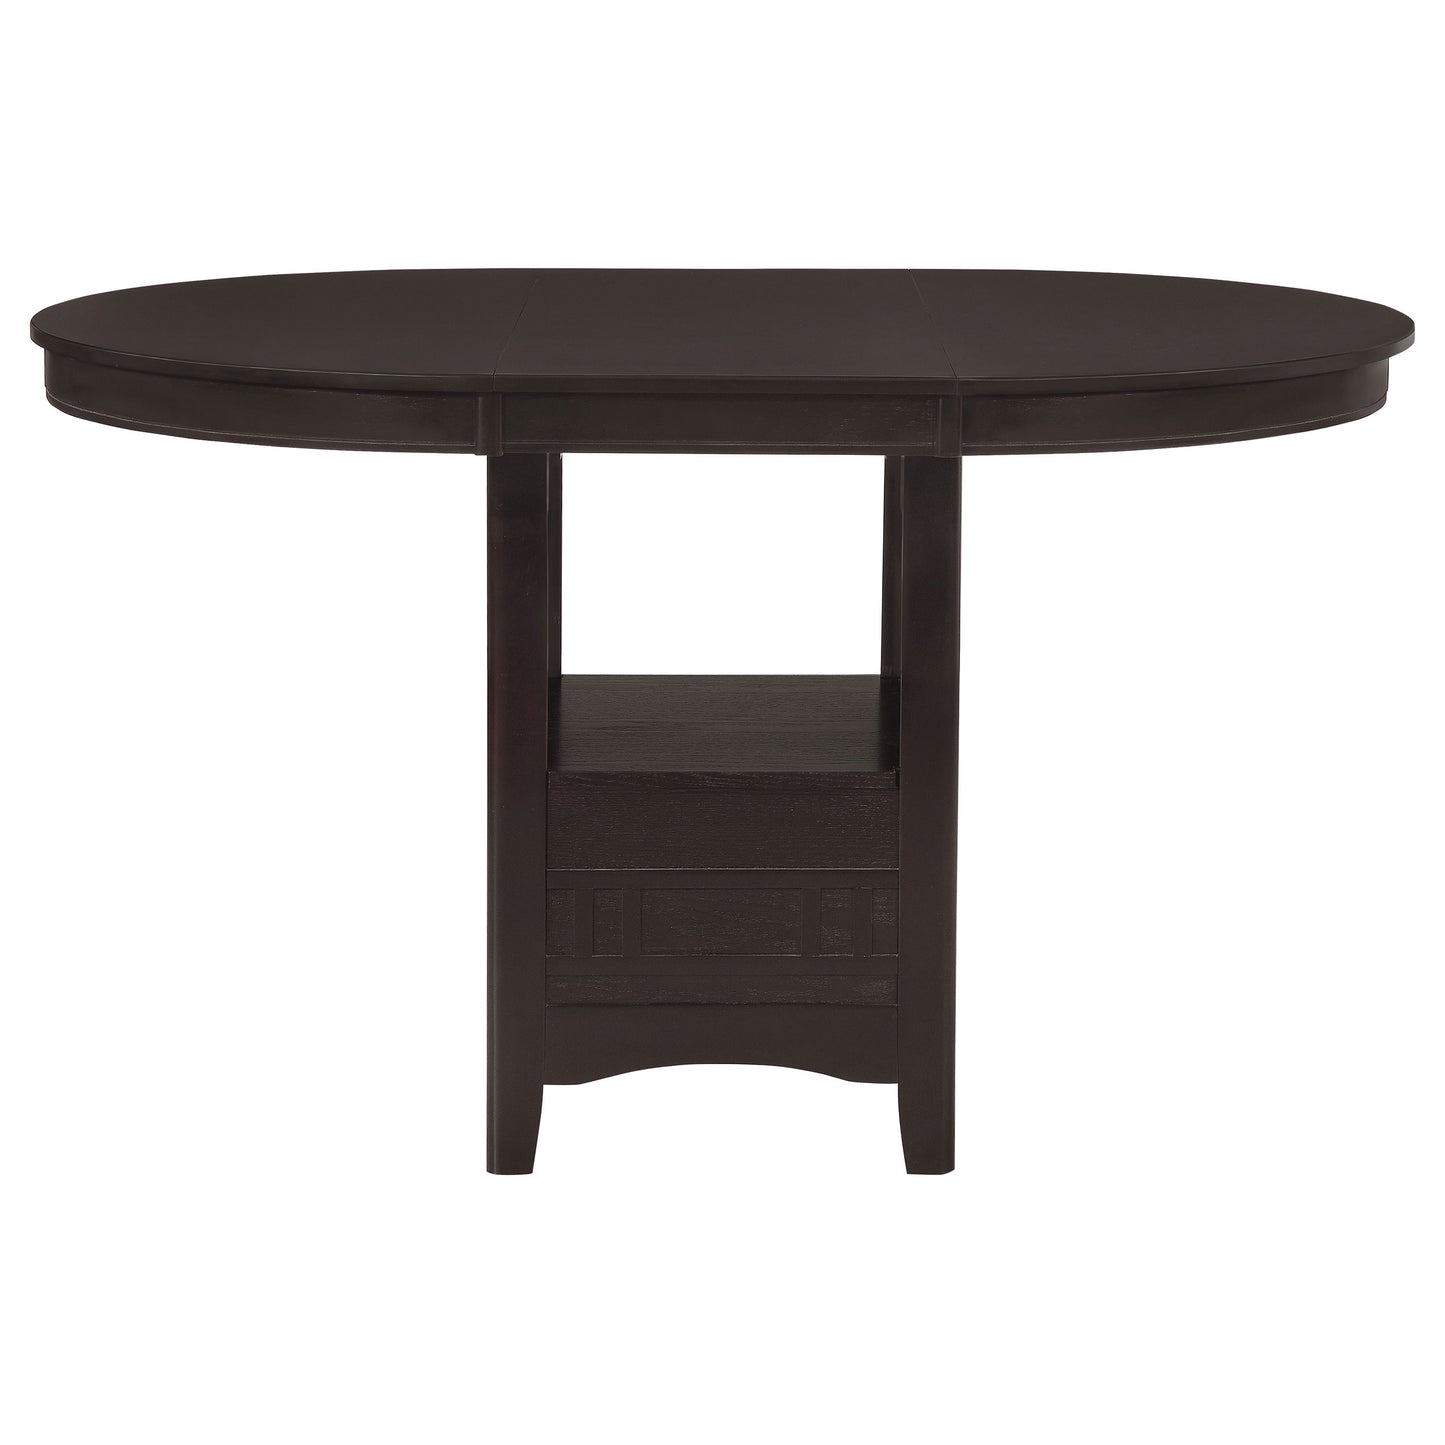 Lavon Oval Counter Height Table Espresso